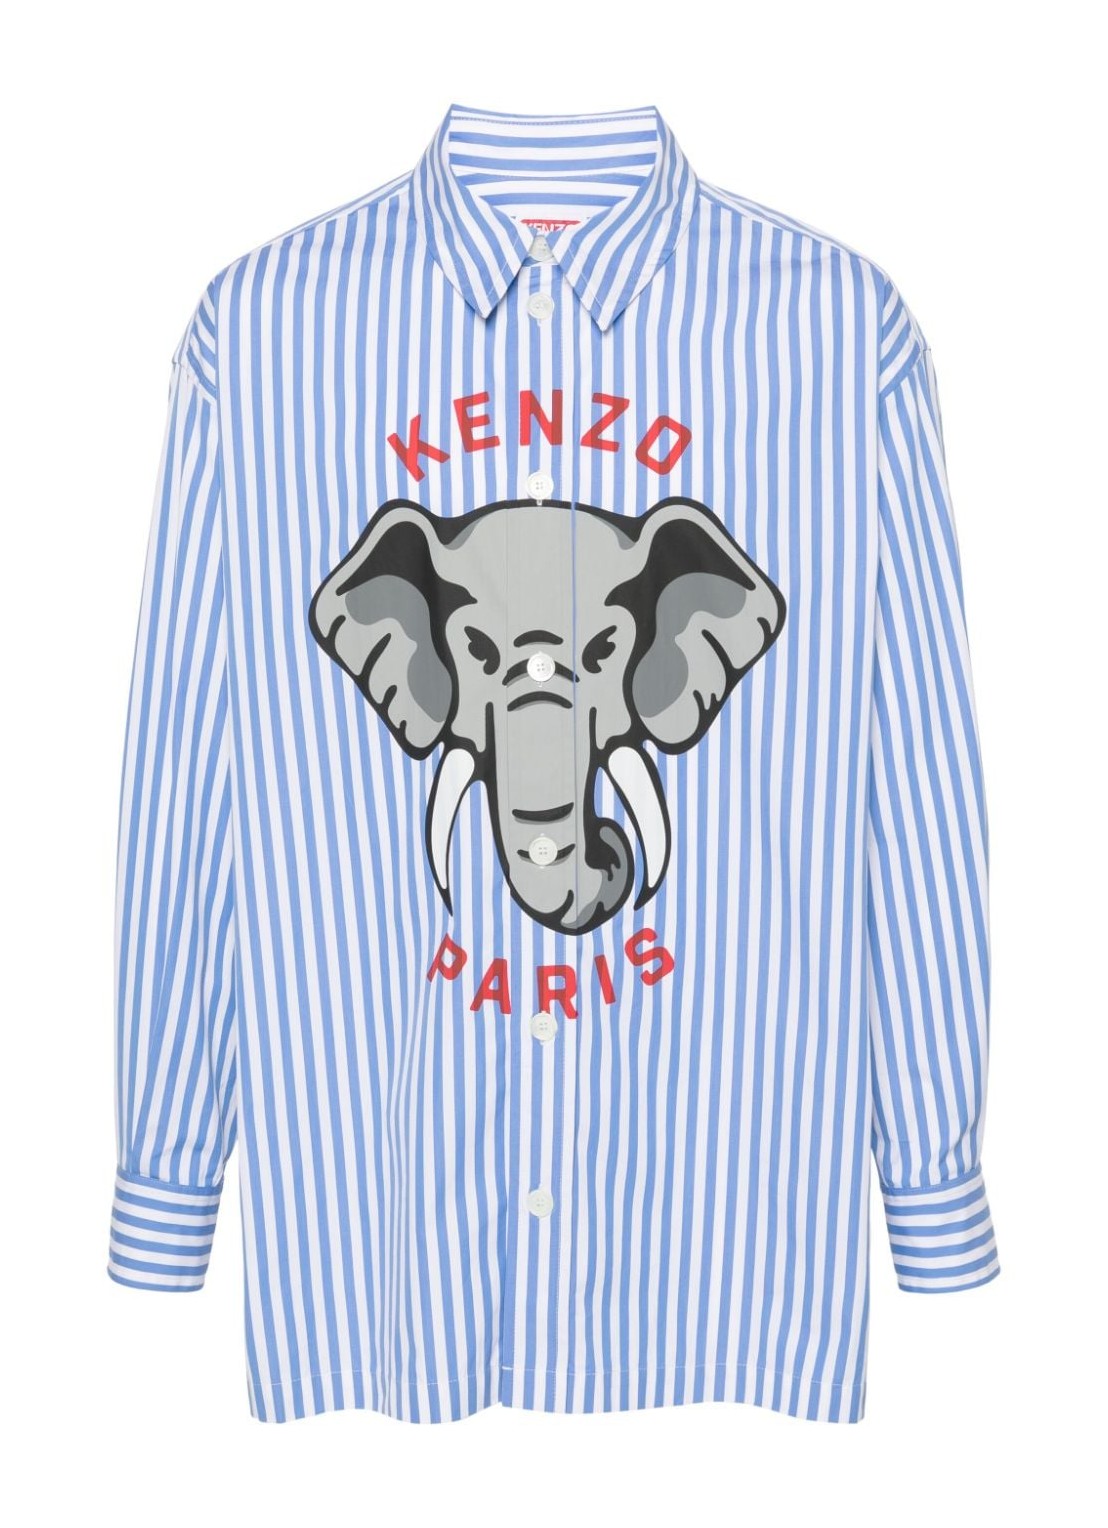 Camiseria kenzo shirt man kenzo elephant oversized shirt fe55ch5109lm 71 talla M
 